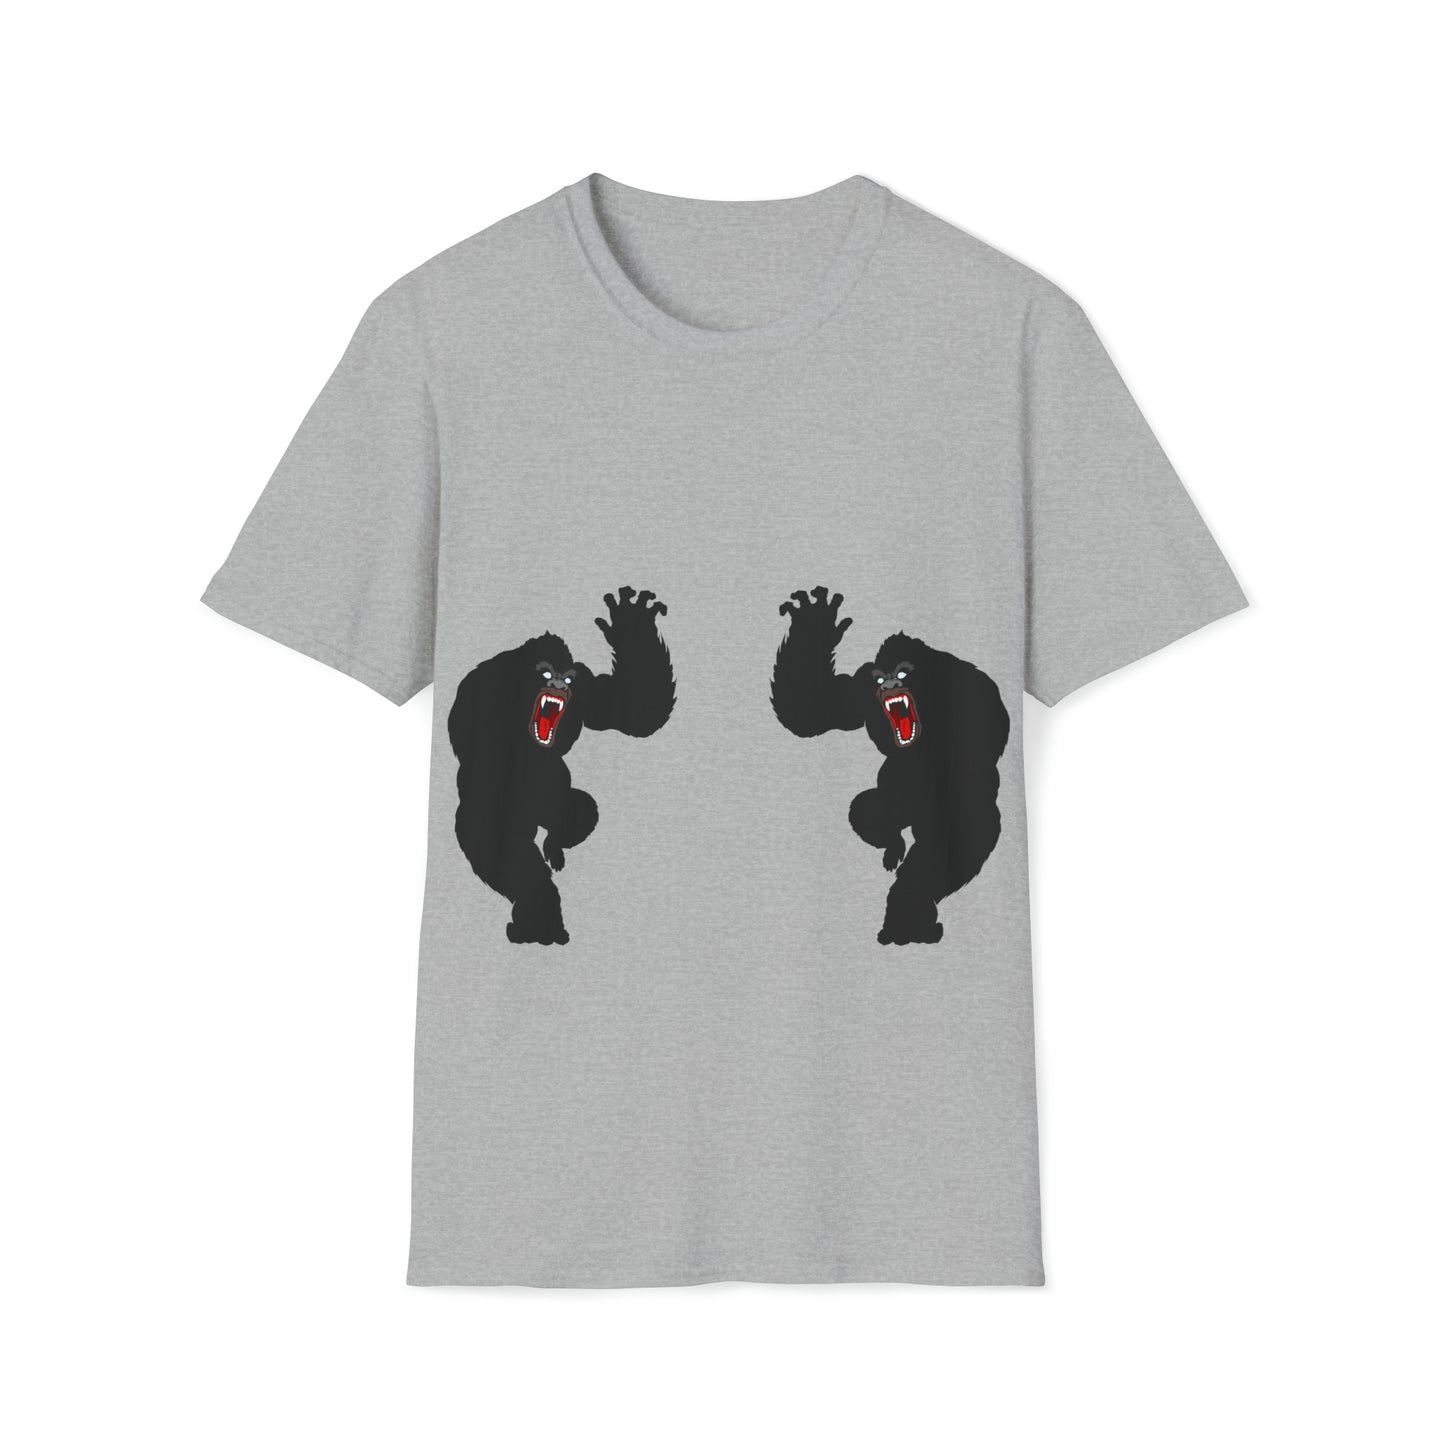 Dancing Gorillas T-Shirt